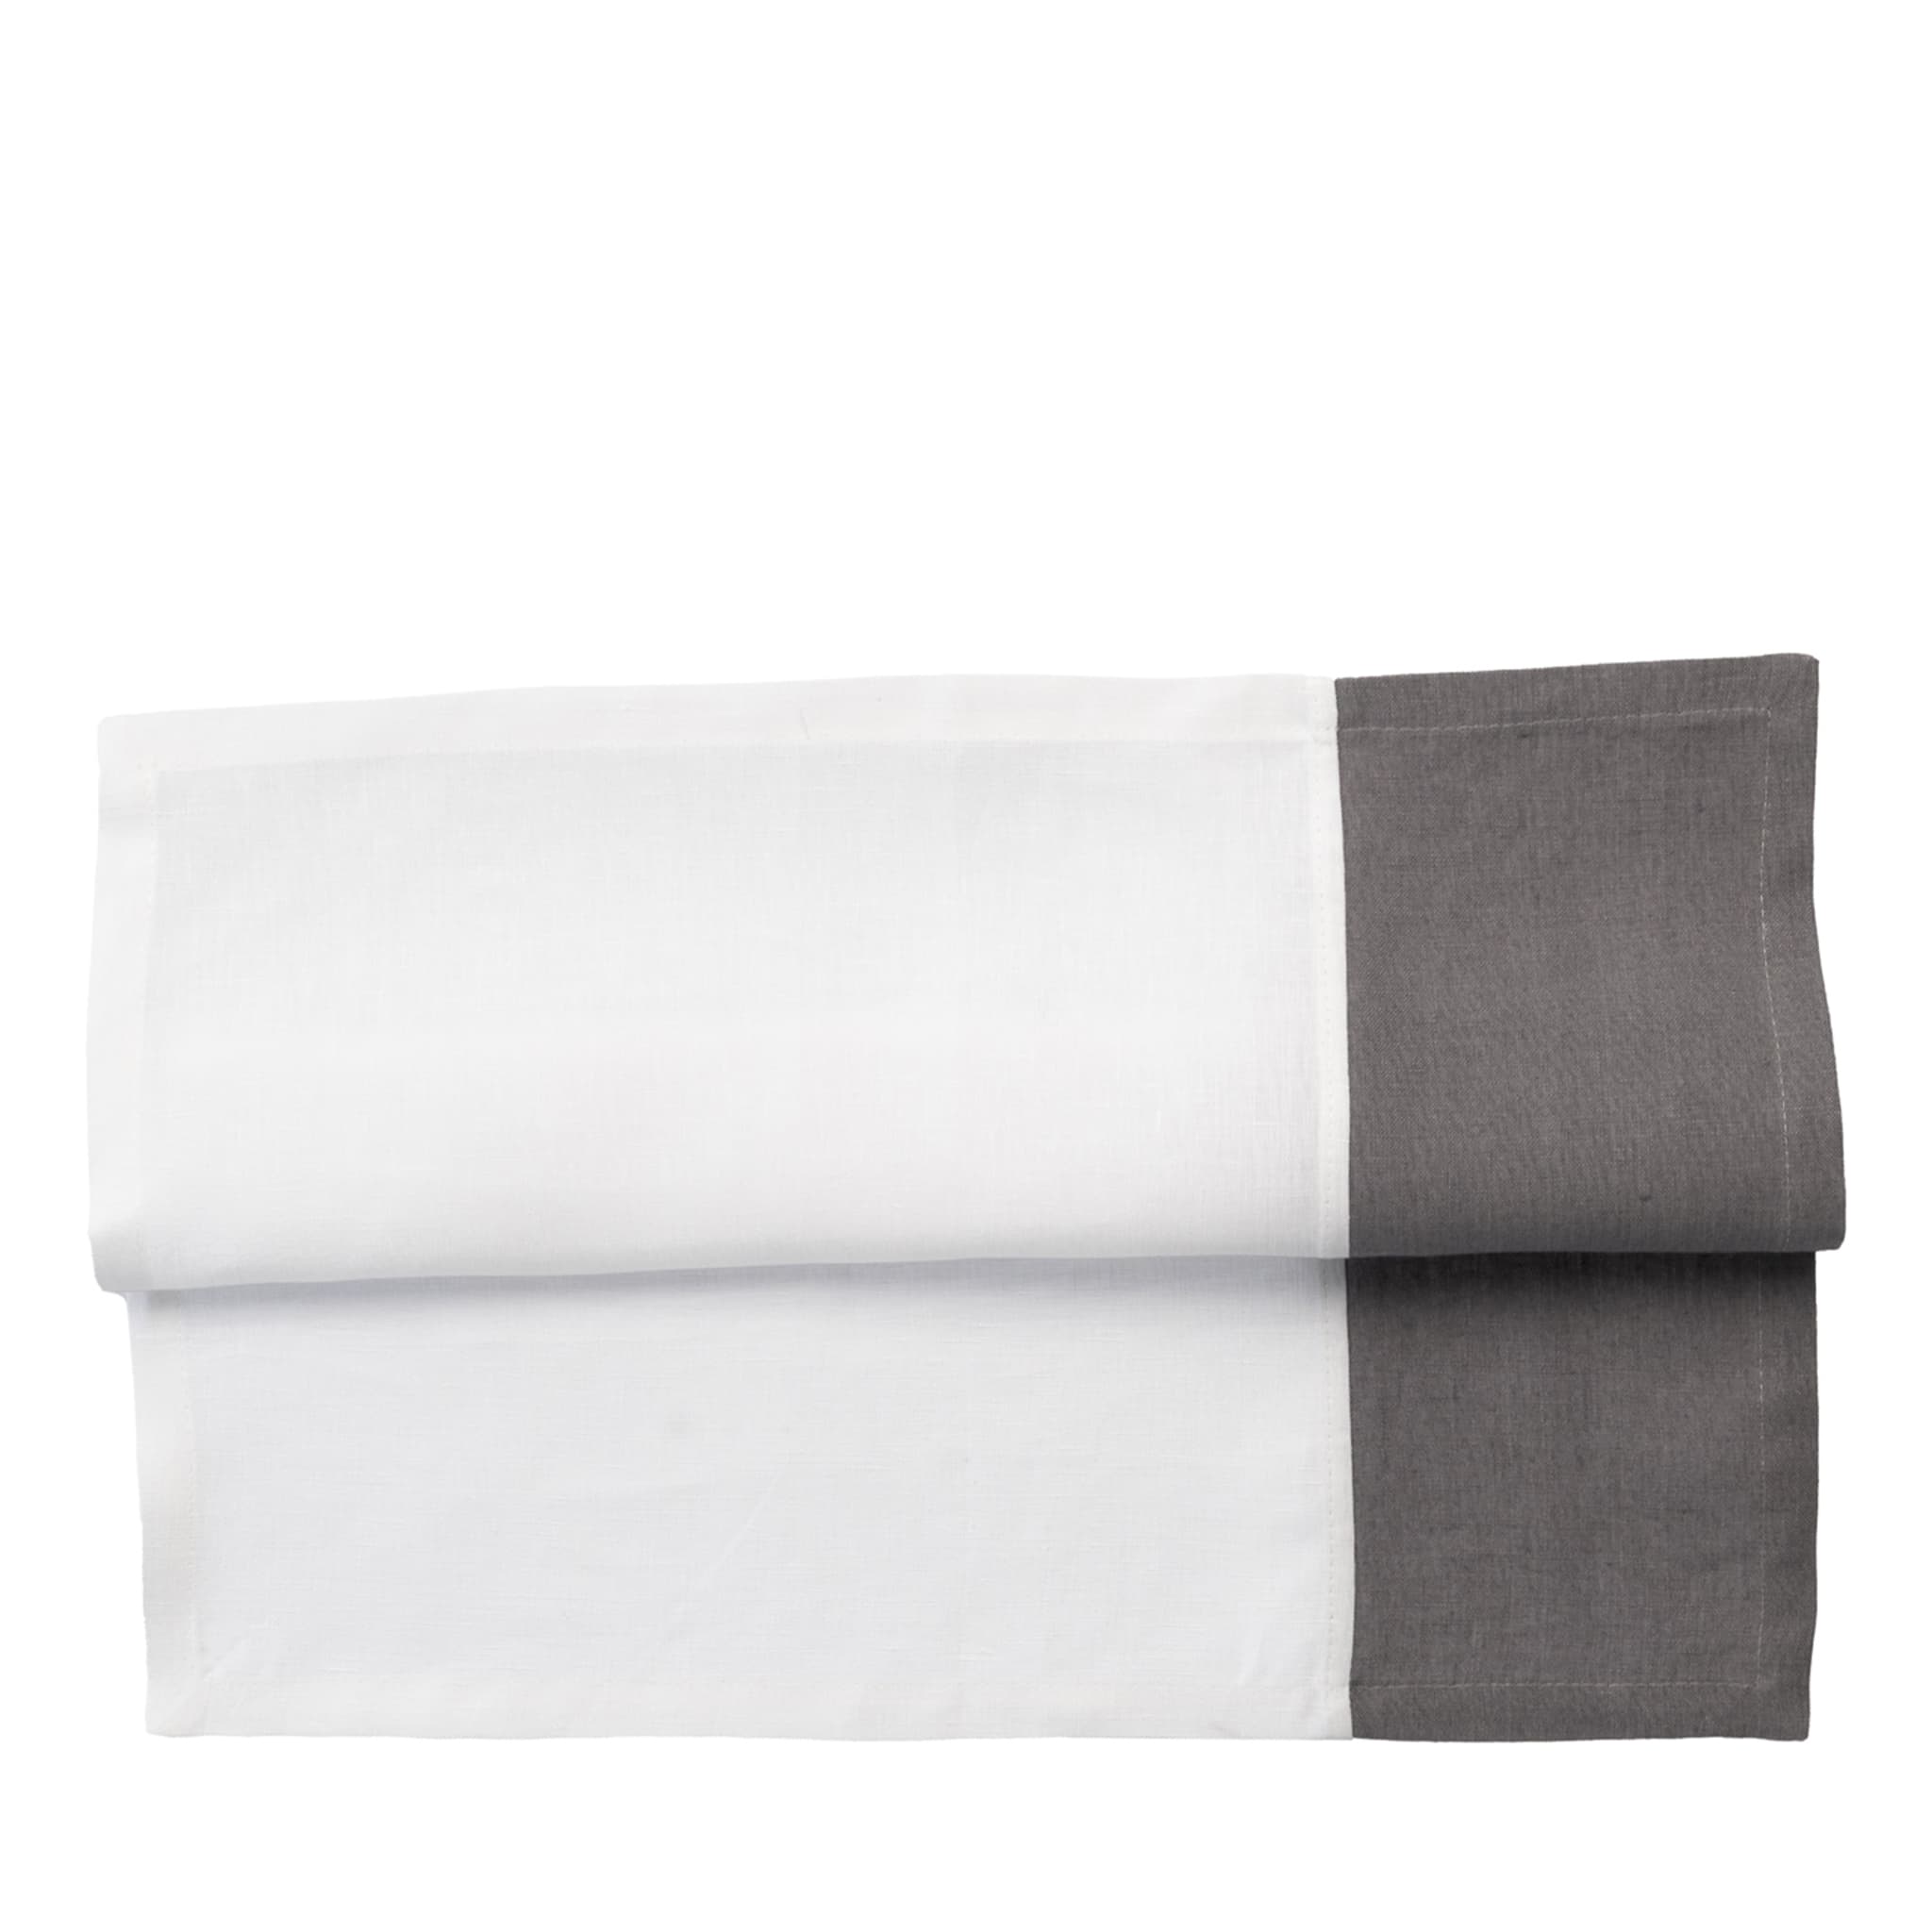 Set of 4 Luxury Bicolor White-Grey Linen Napkins - Main view